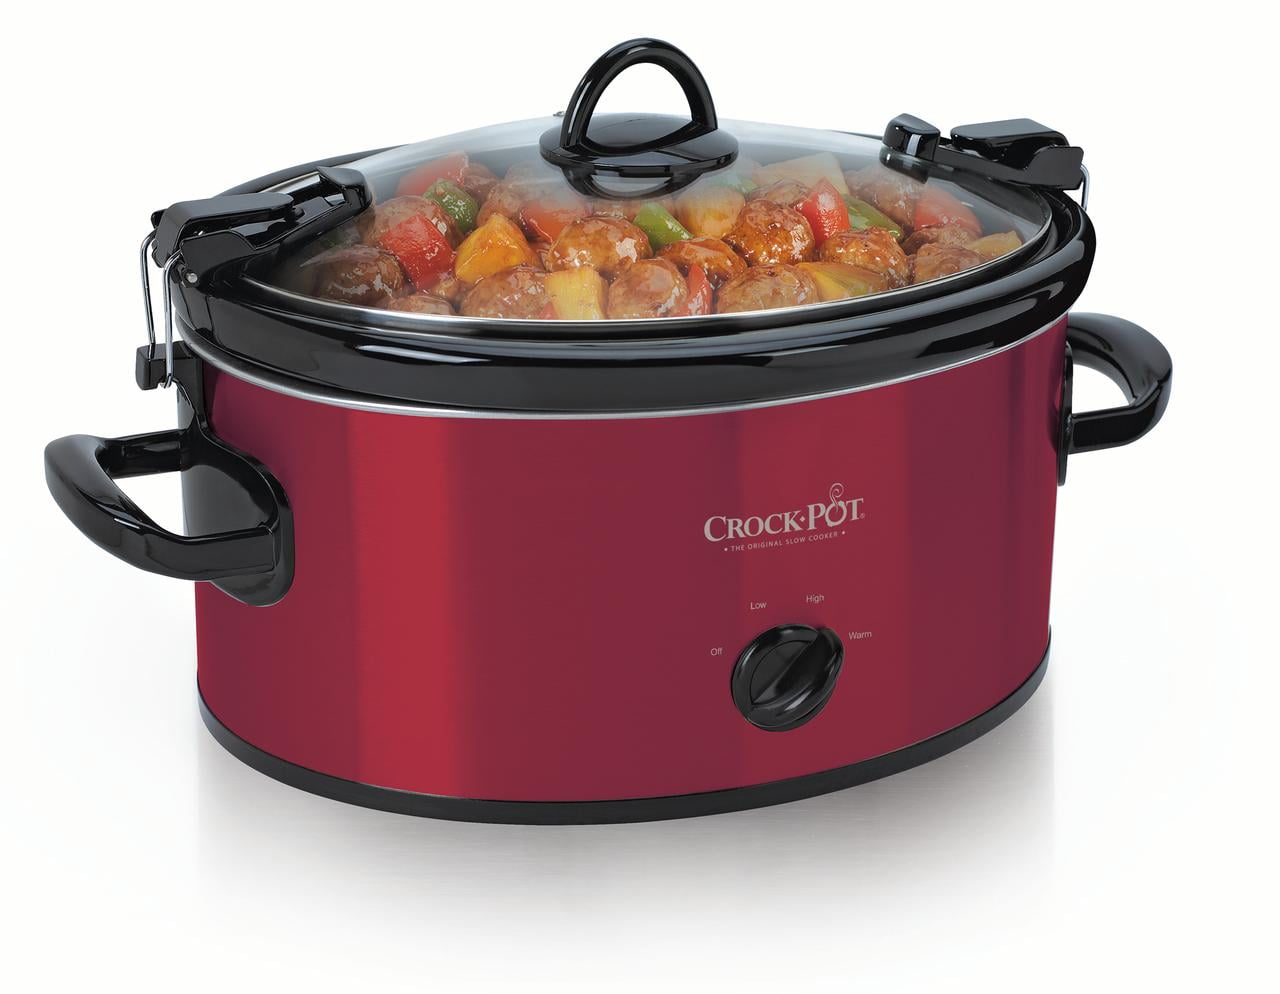 Crock-Pot Cook & Carry Manual Slow Cooker, 6-Quart (SCCPVL600-R)